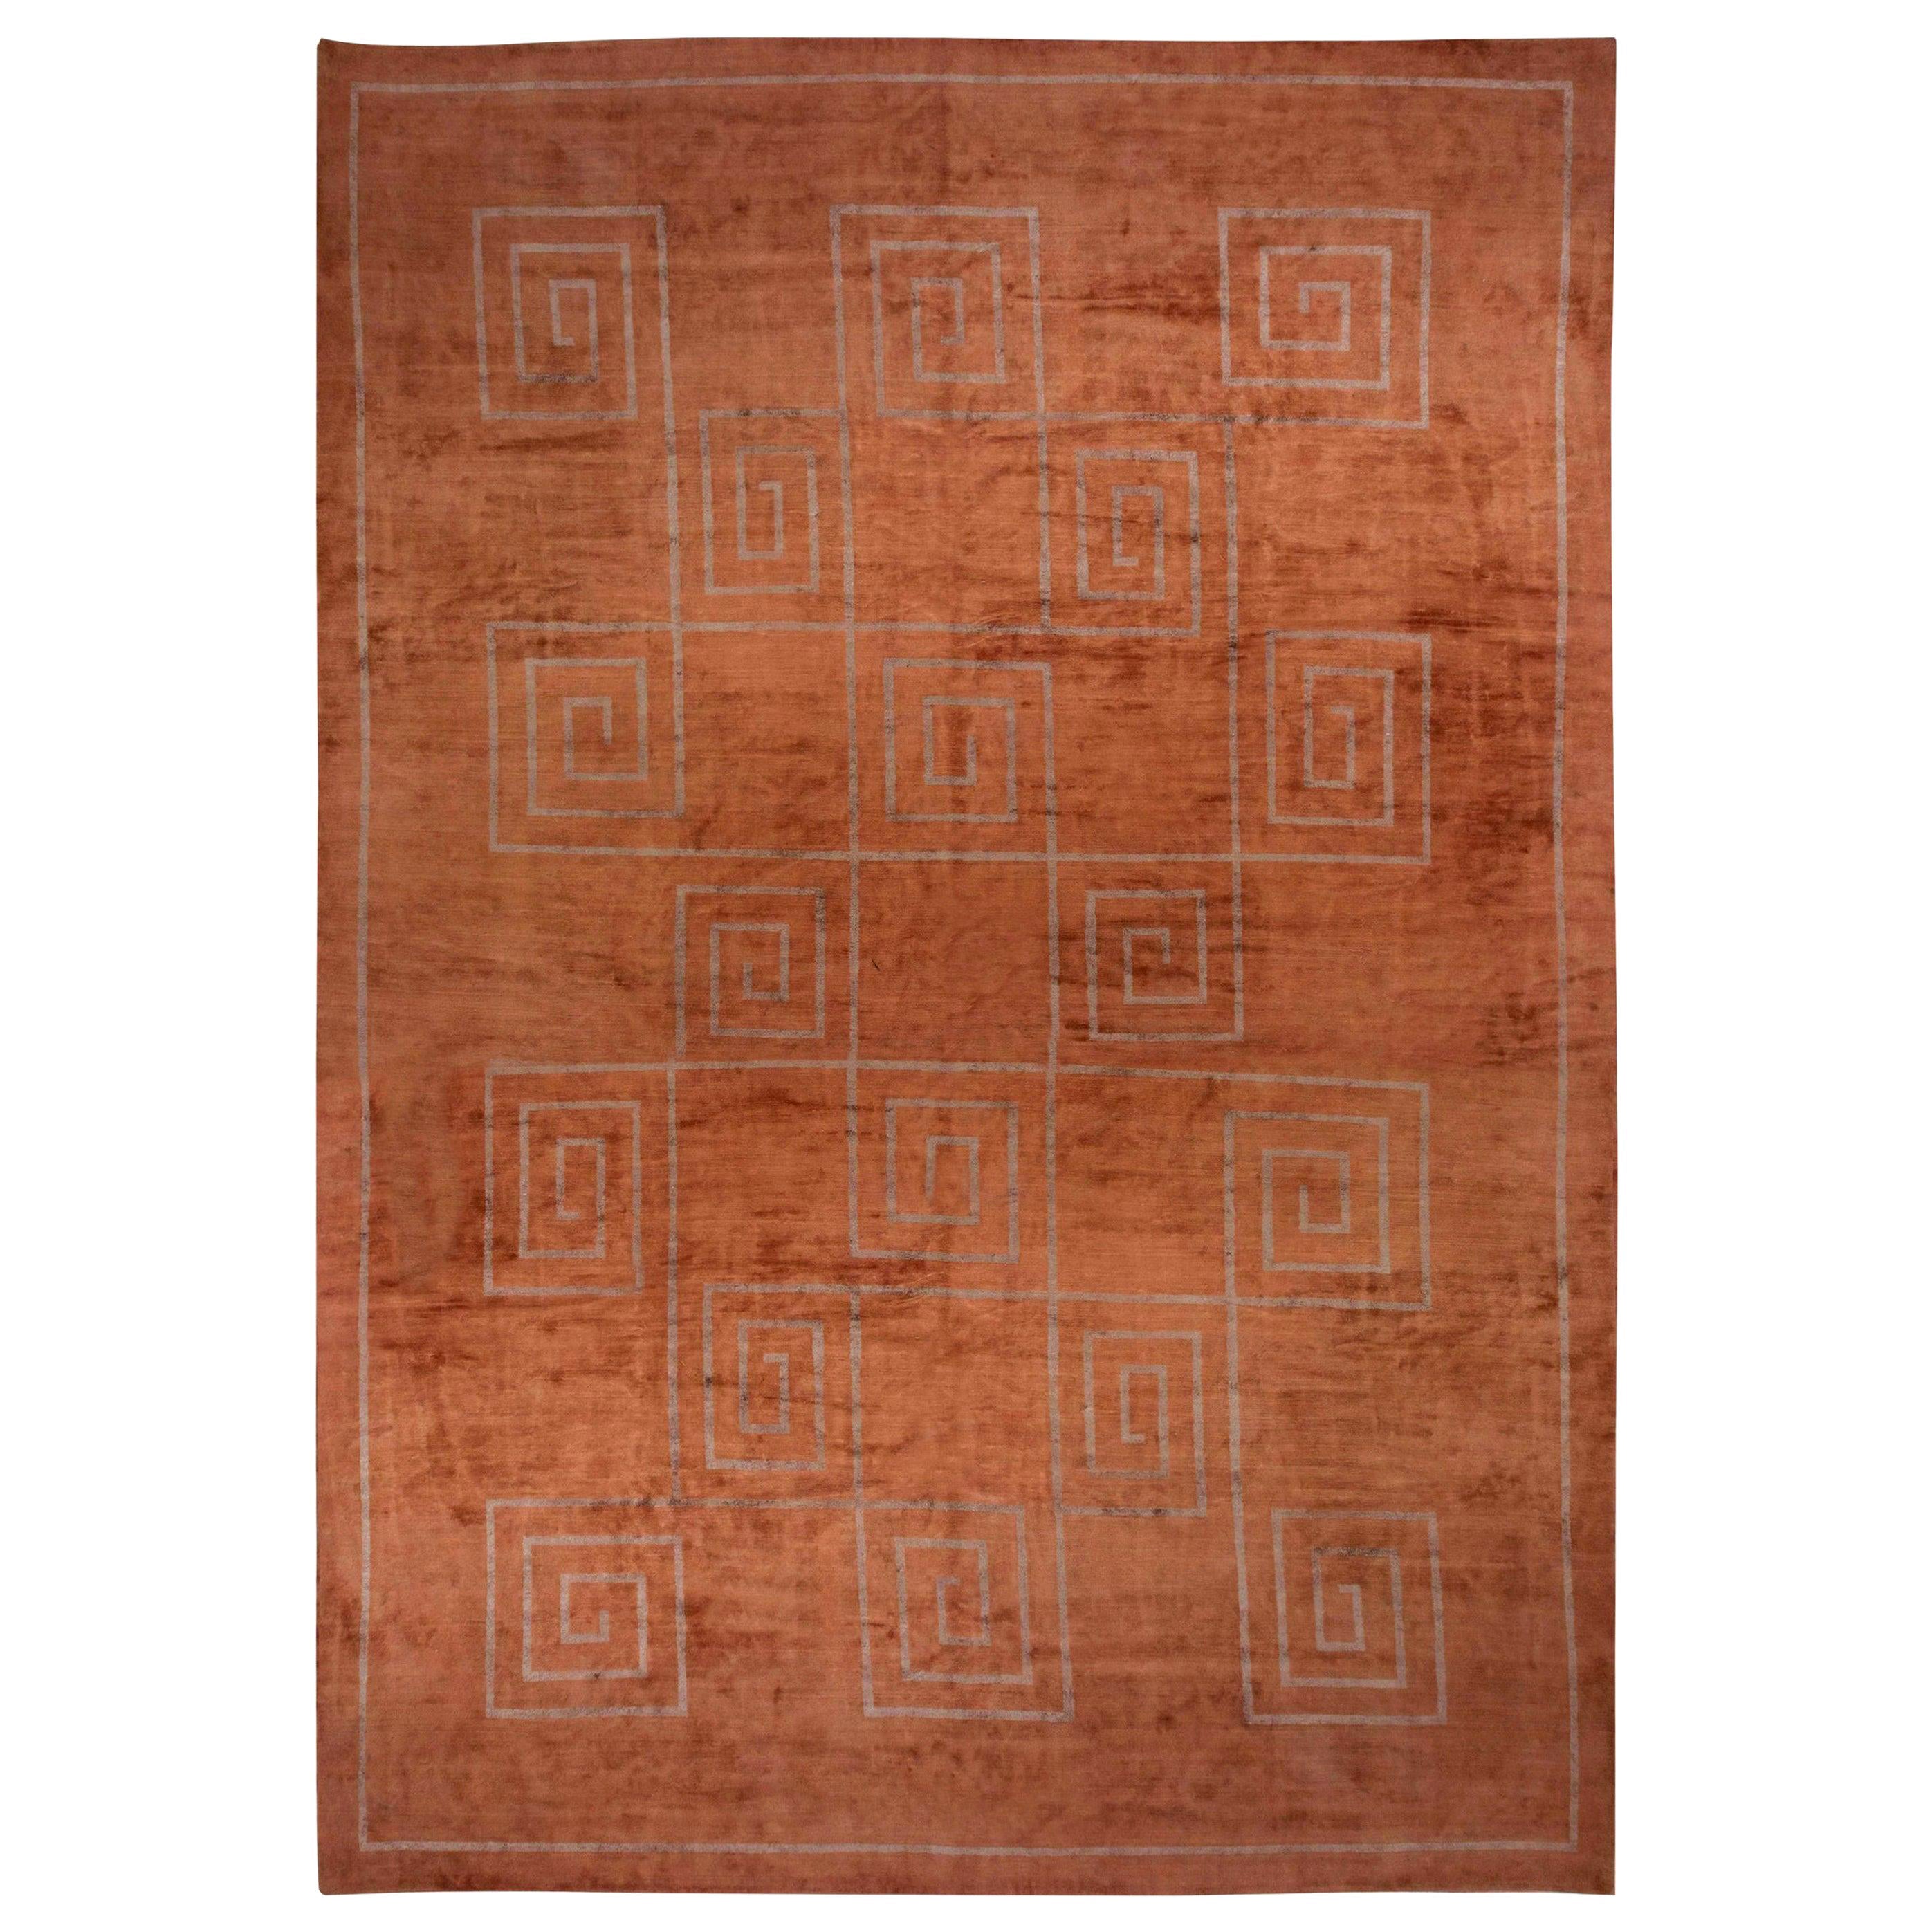 Contemporary Tibetan Greek Key Handmade Wool and Silk Rug by Doris Leslie Blau